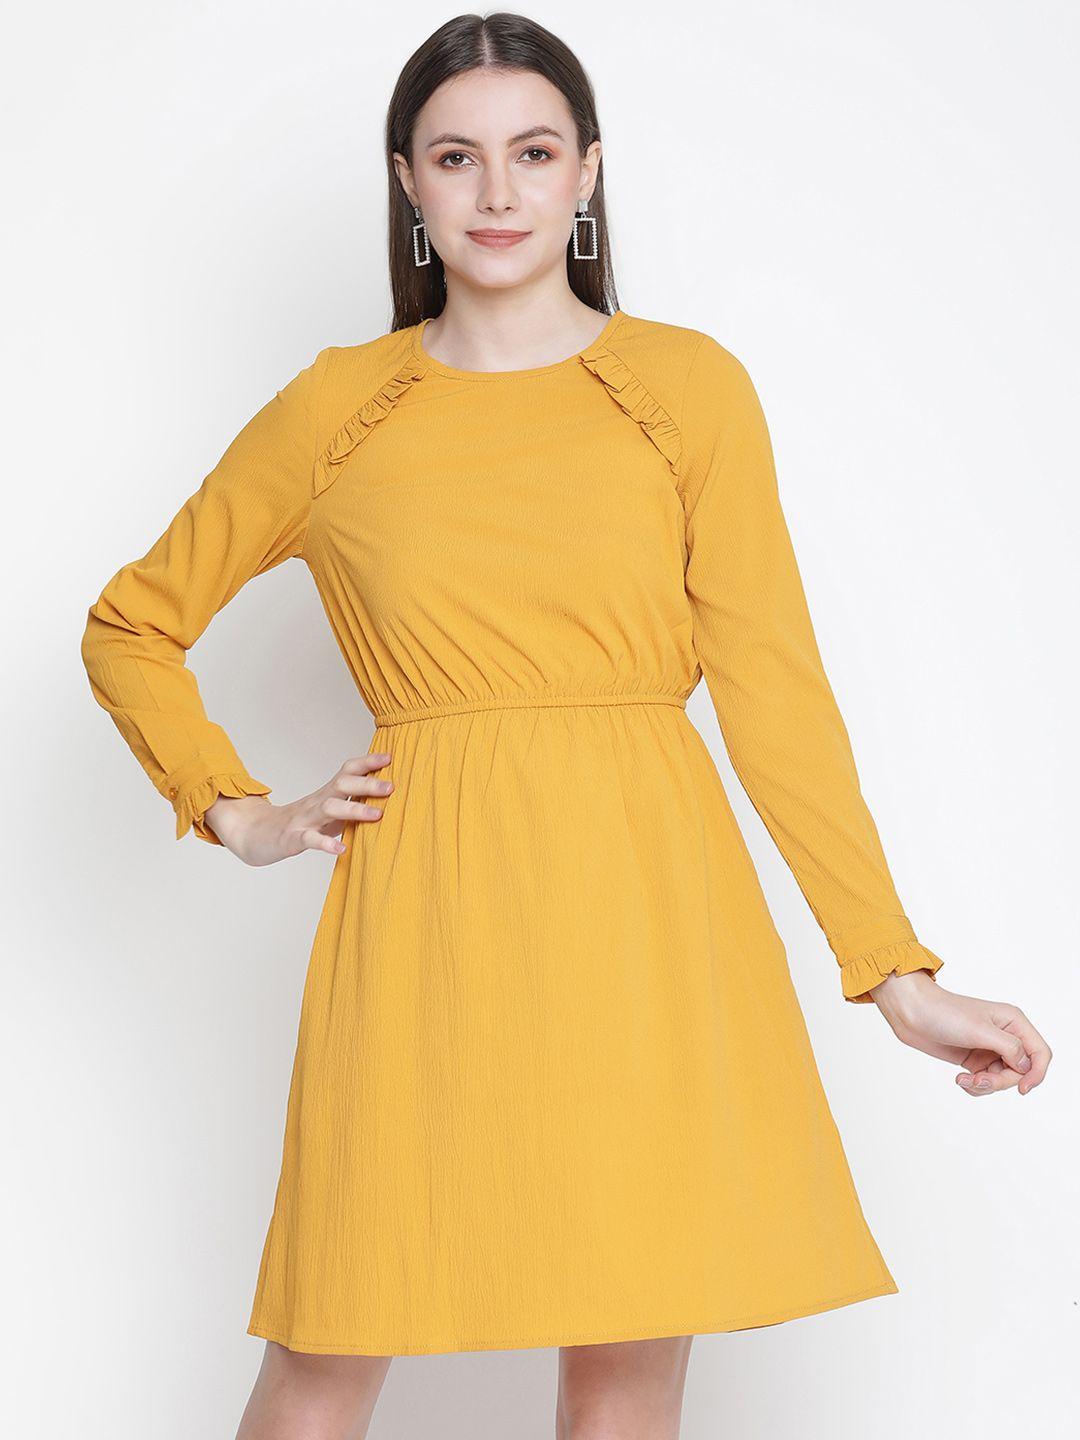 oxolloxo mustard yellow satin dress